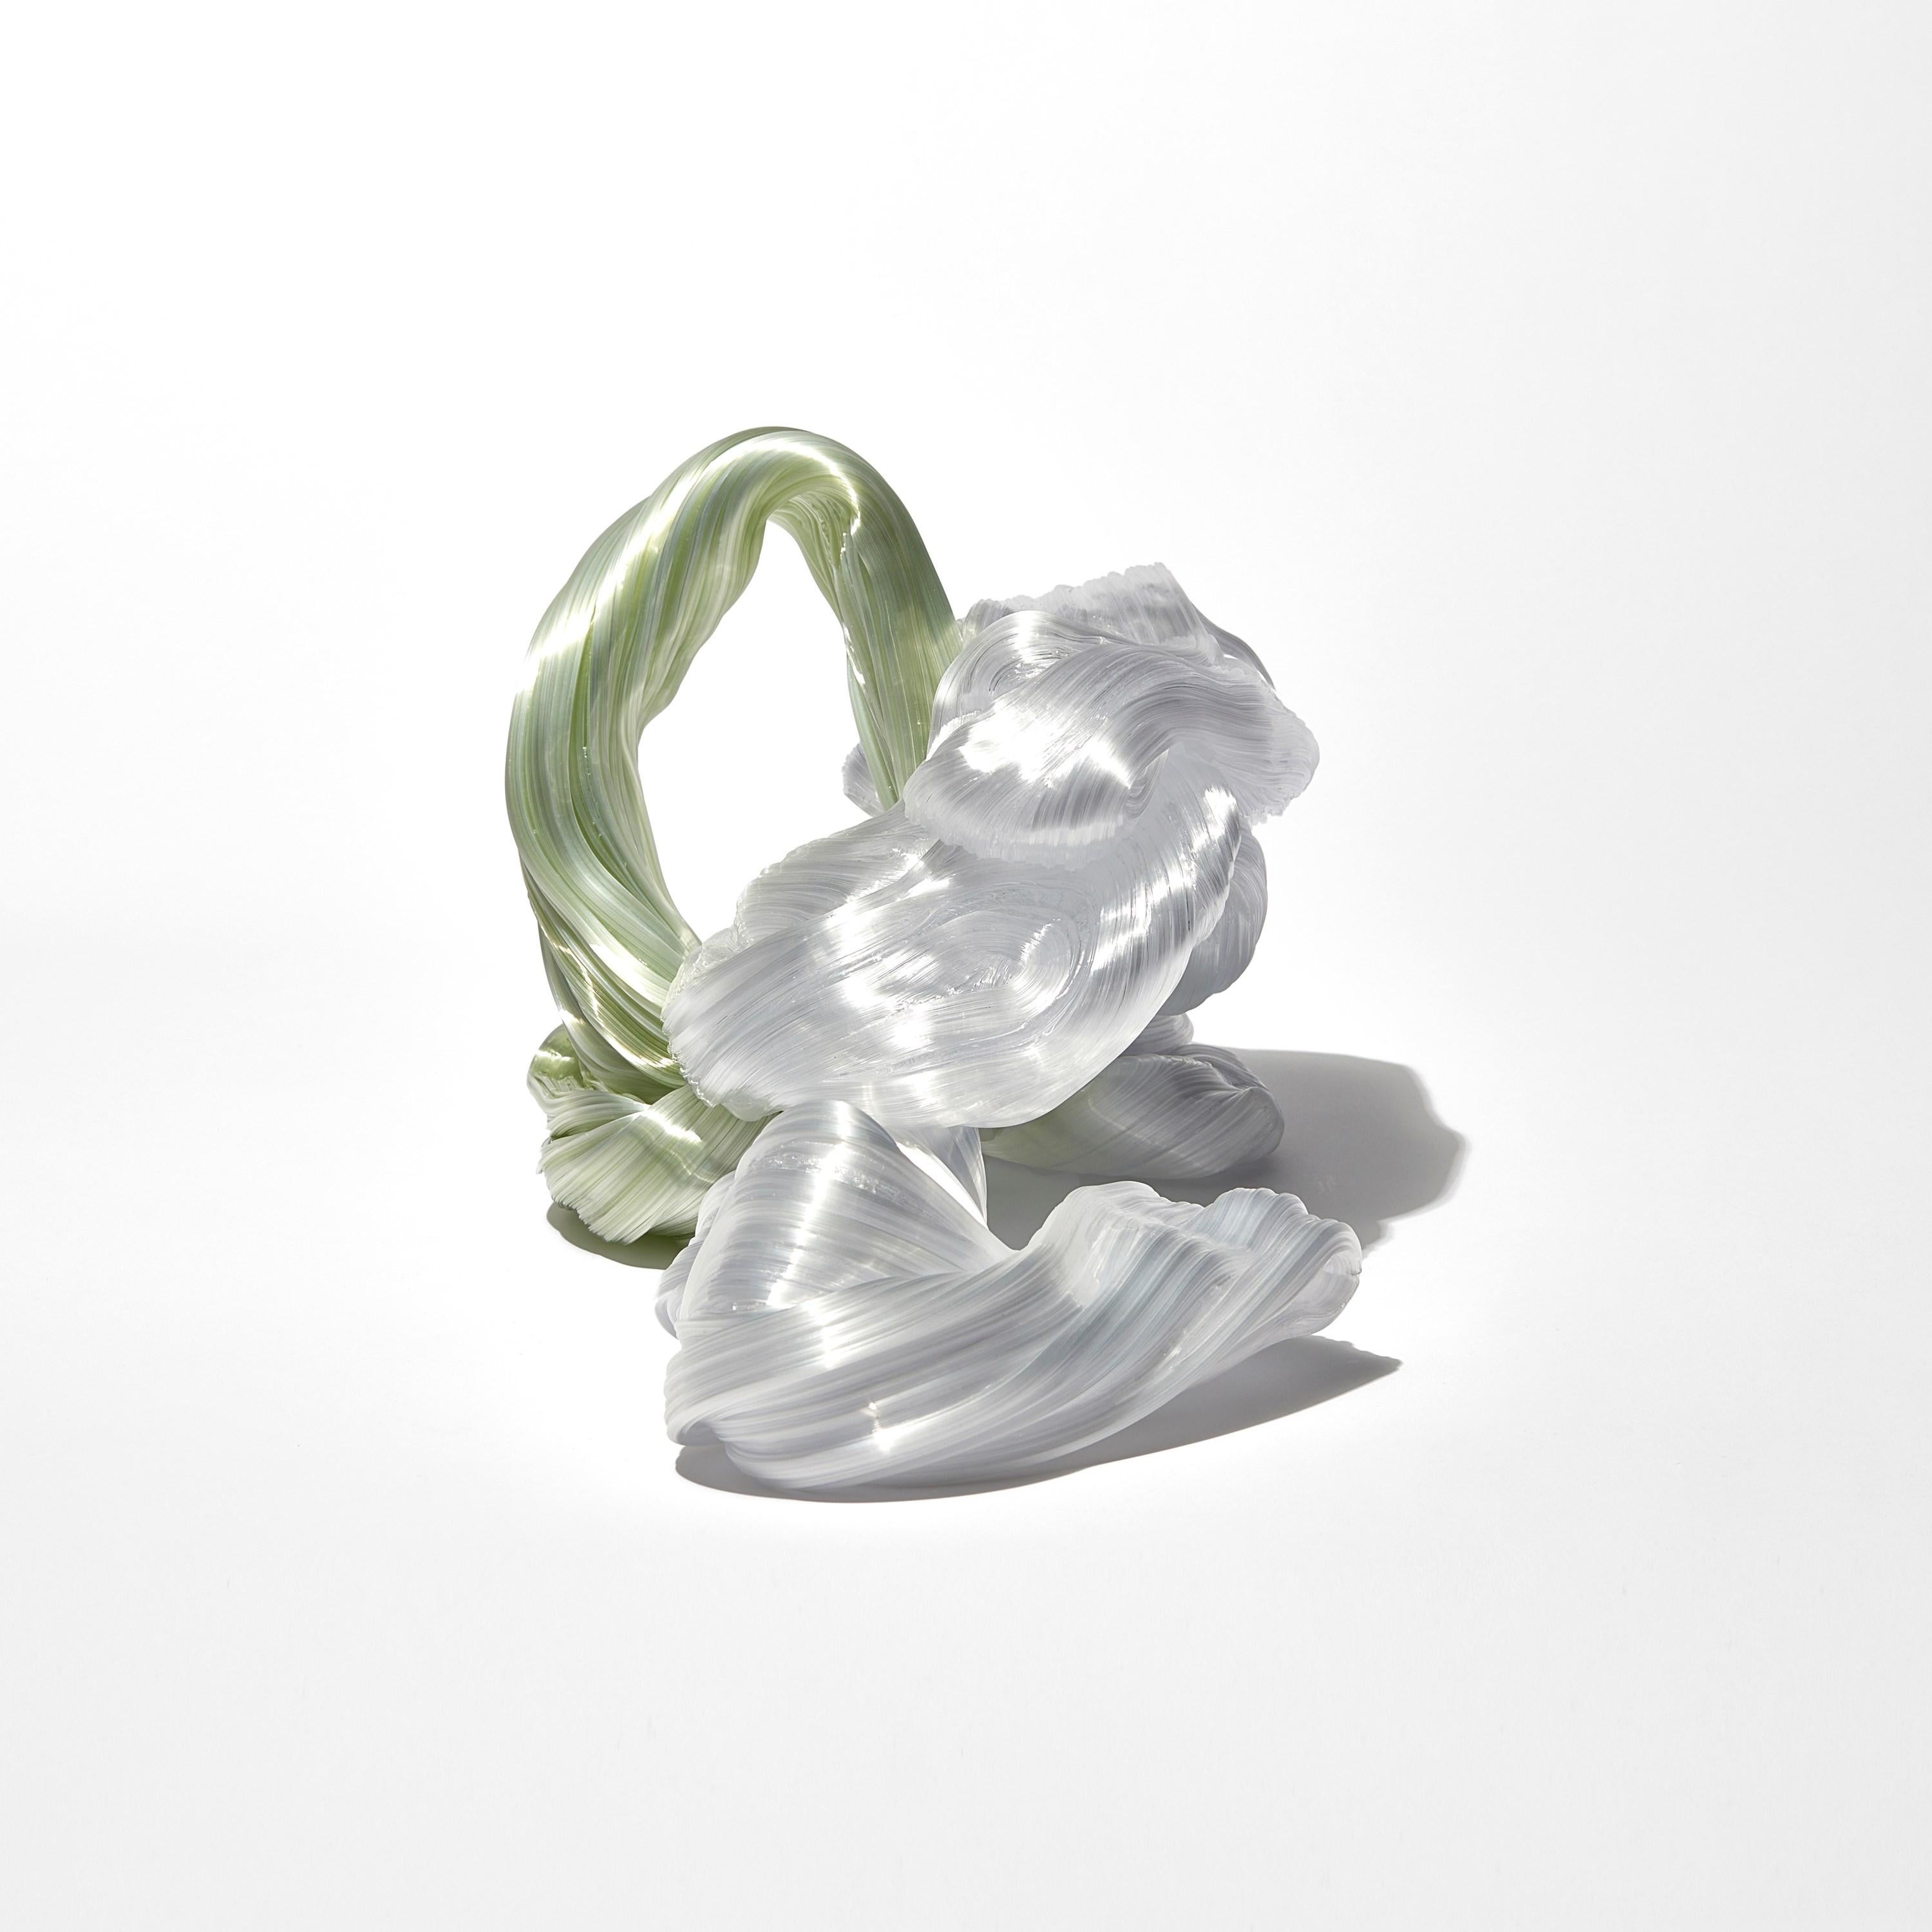 Organic Modern Community, abstract white & soft lime green glass artwork by Maria Bang Espersen